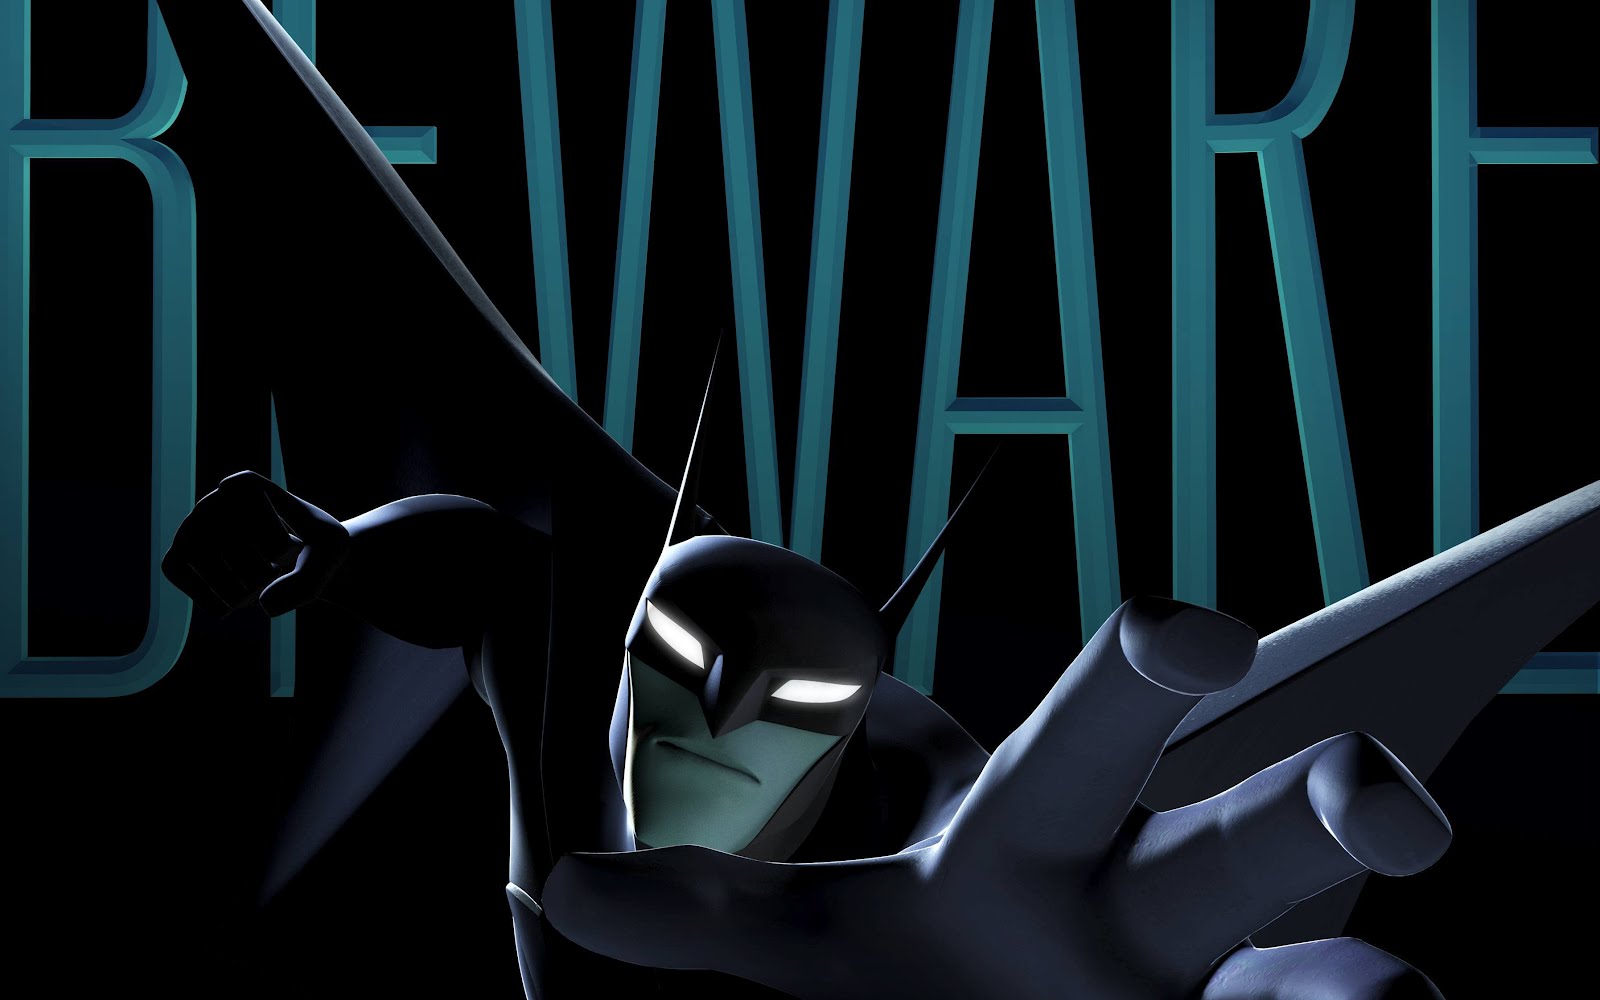 The Beware Batman Promotional Image Into A Wallpaper Via